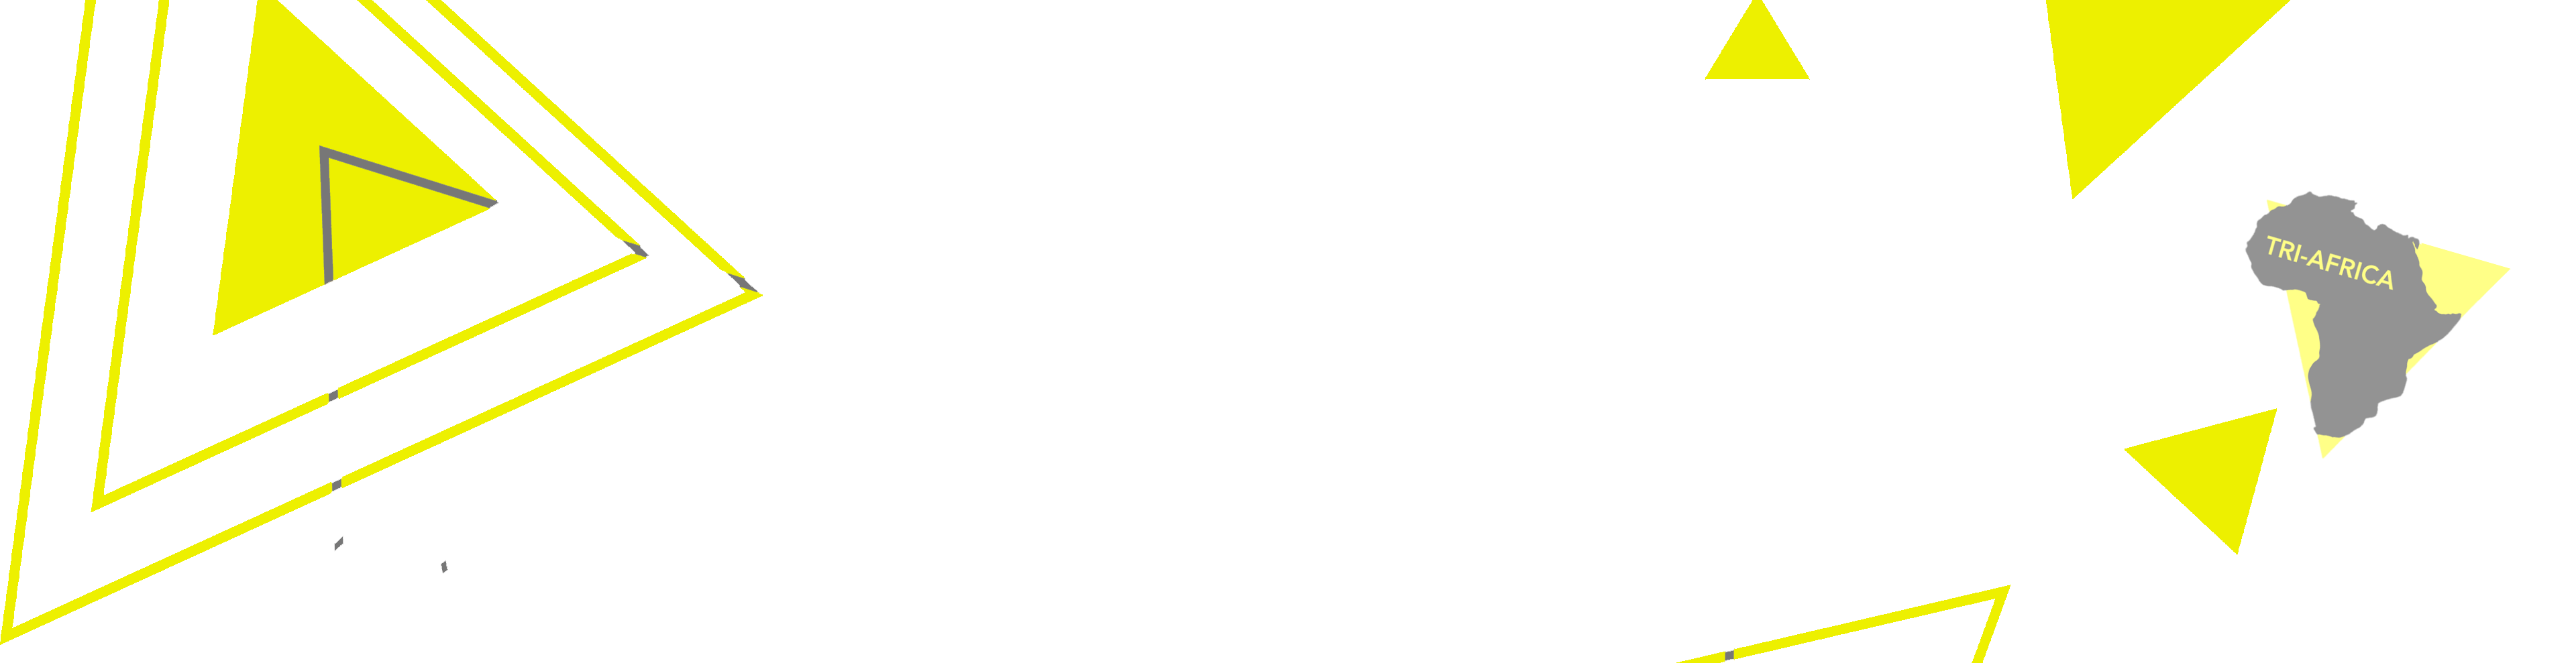 FUBU brand top image